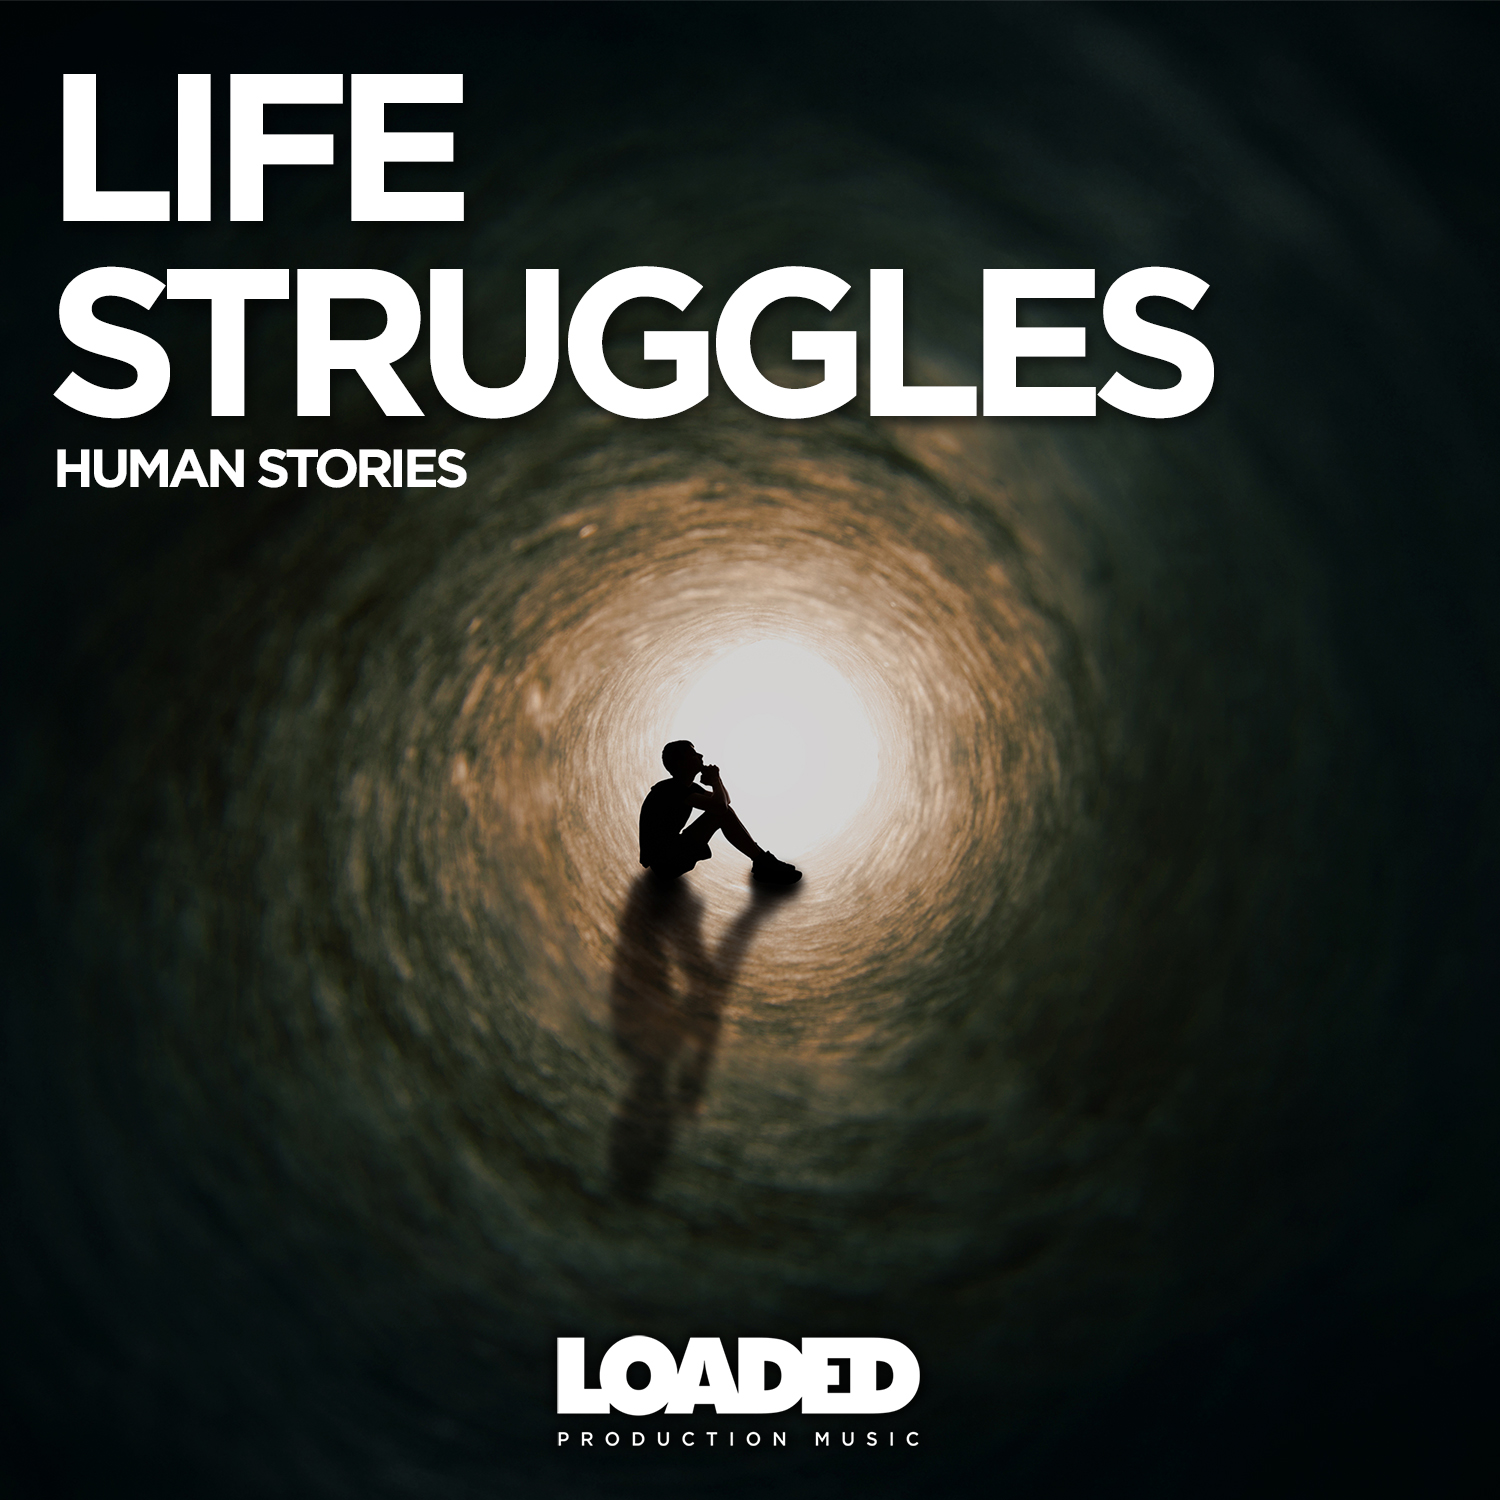 LPM 142 - Life Struggles - Human Stories - Album Cover